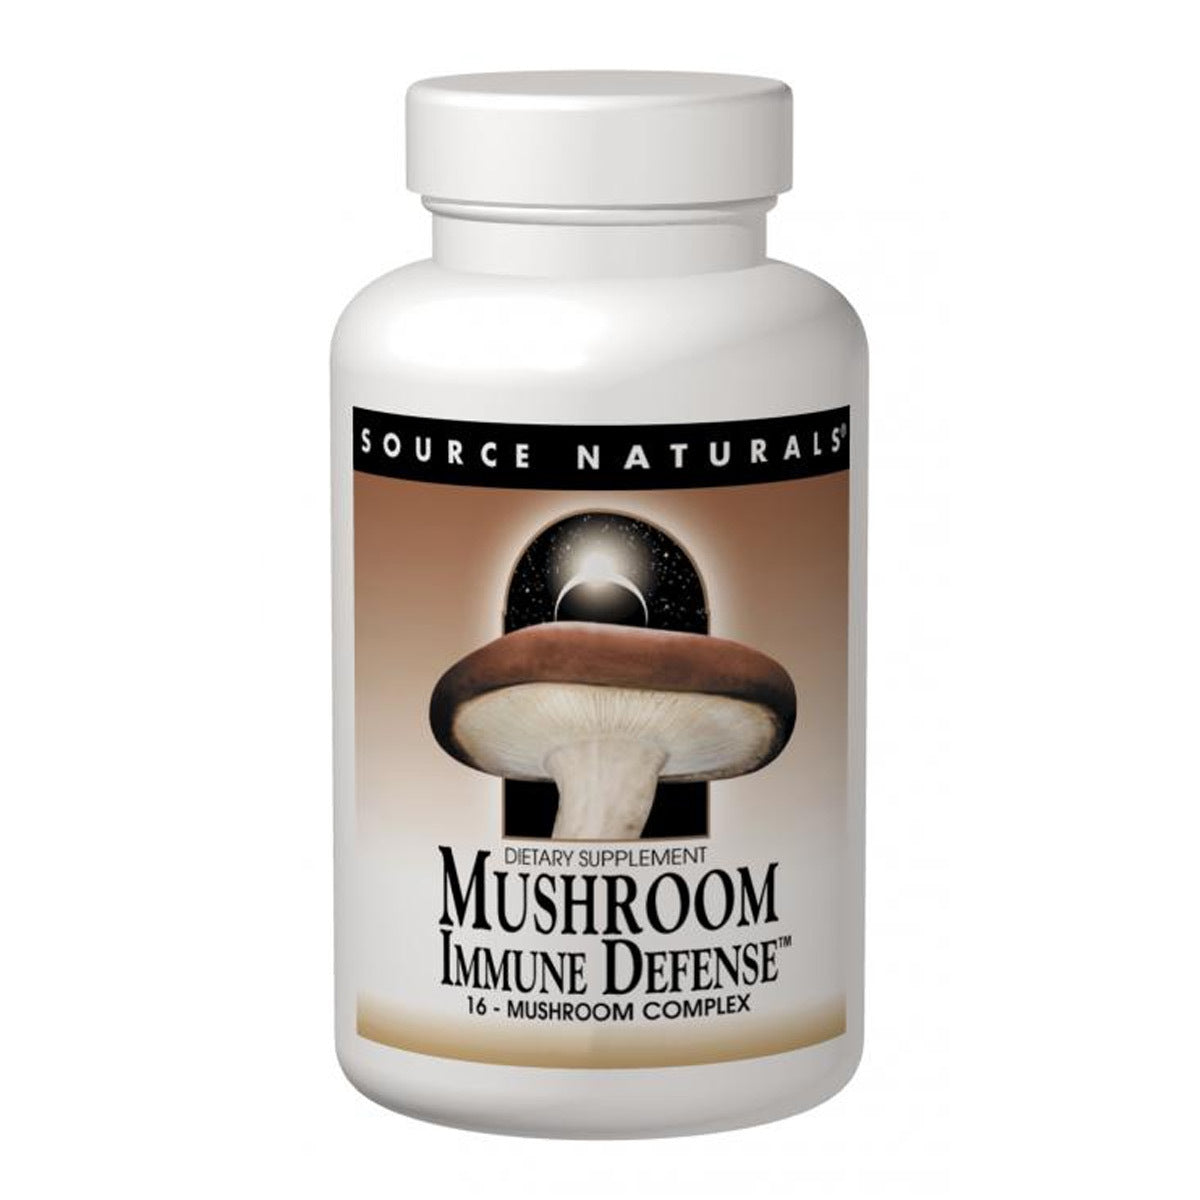 Primary image of Mushroom Immune Defense